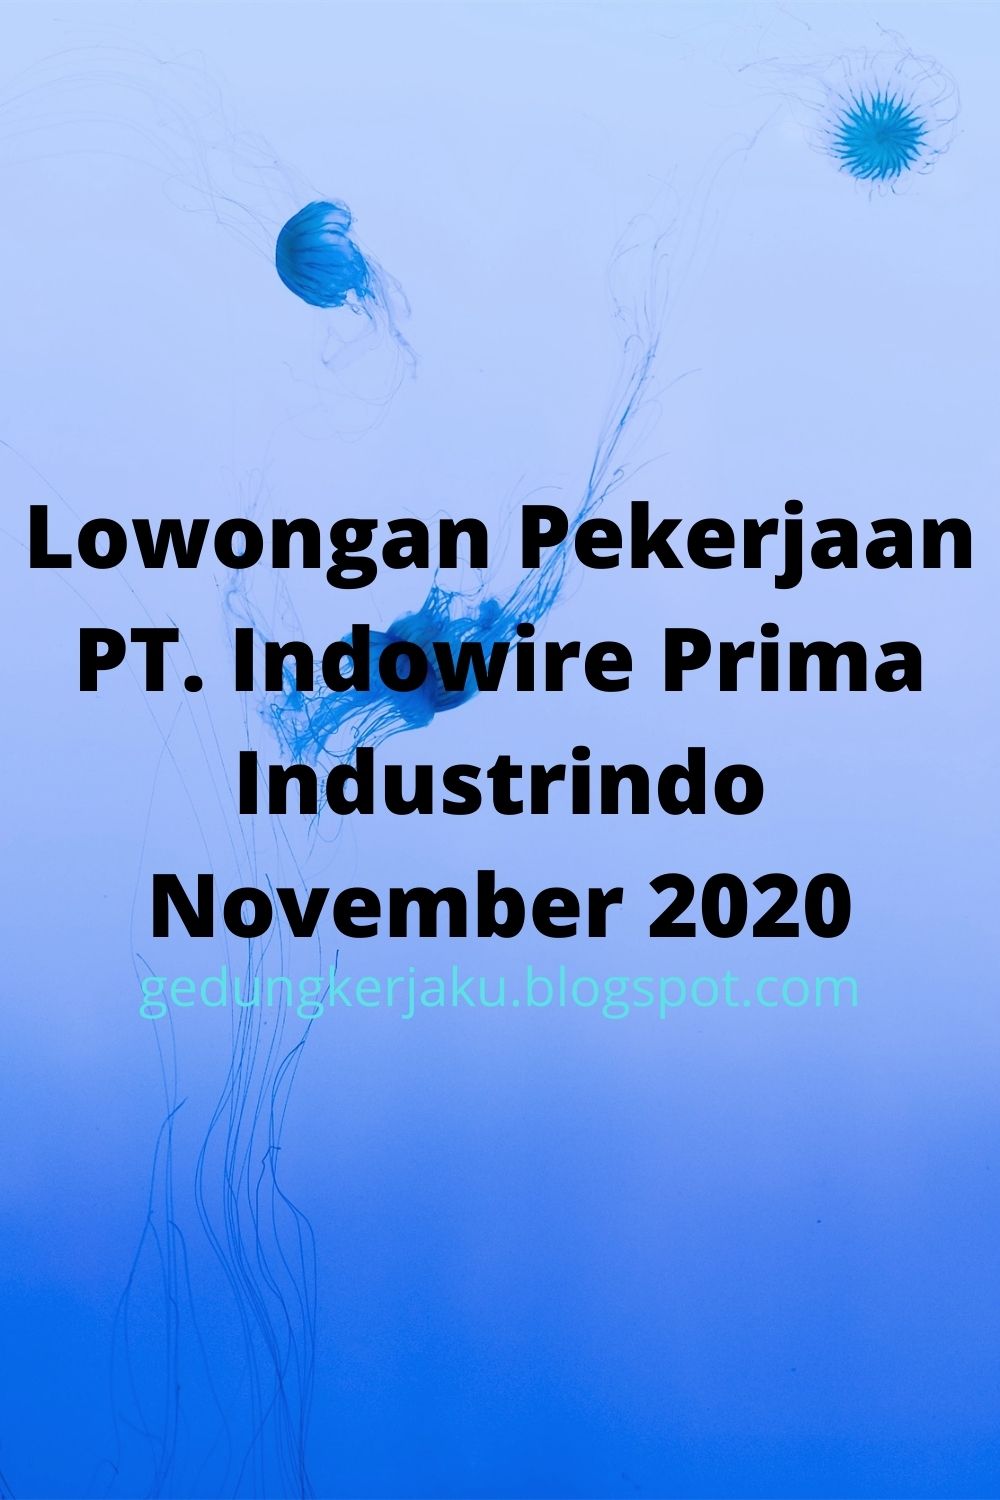 Lowongan Pekerjaan PT. Indowire Prima Industrindo November 2020